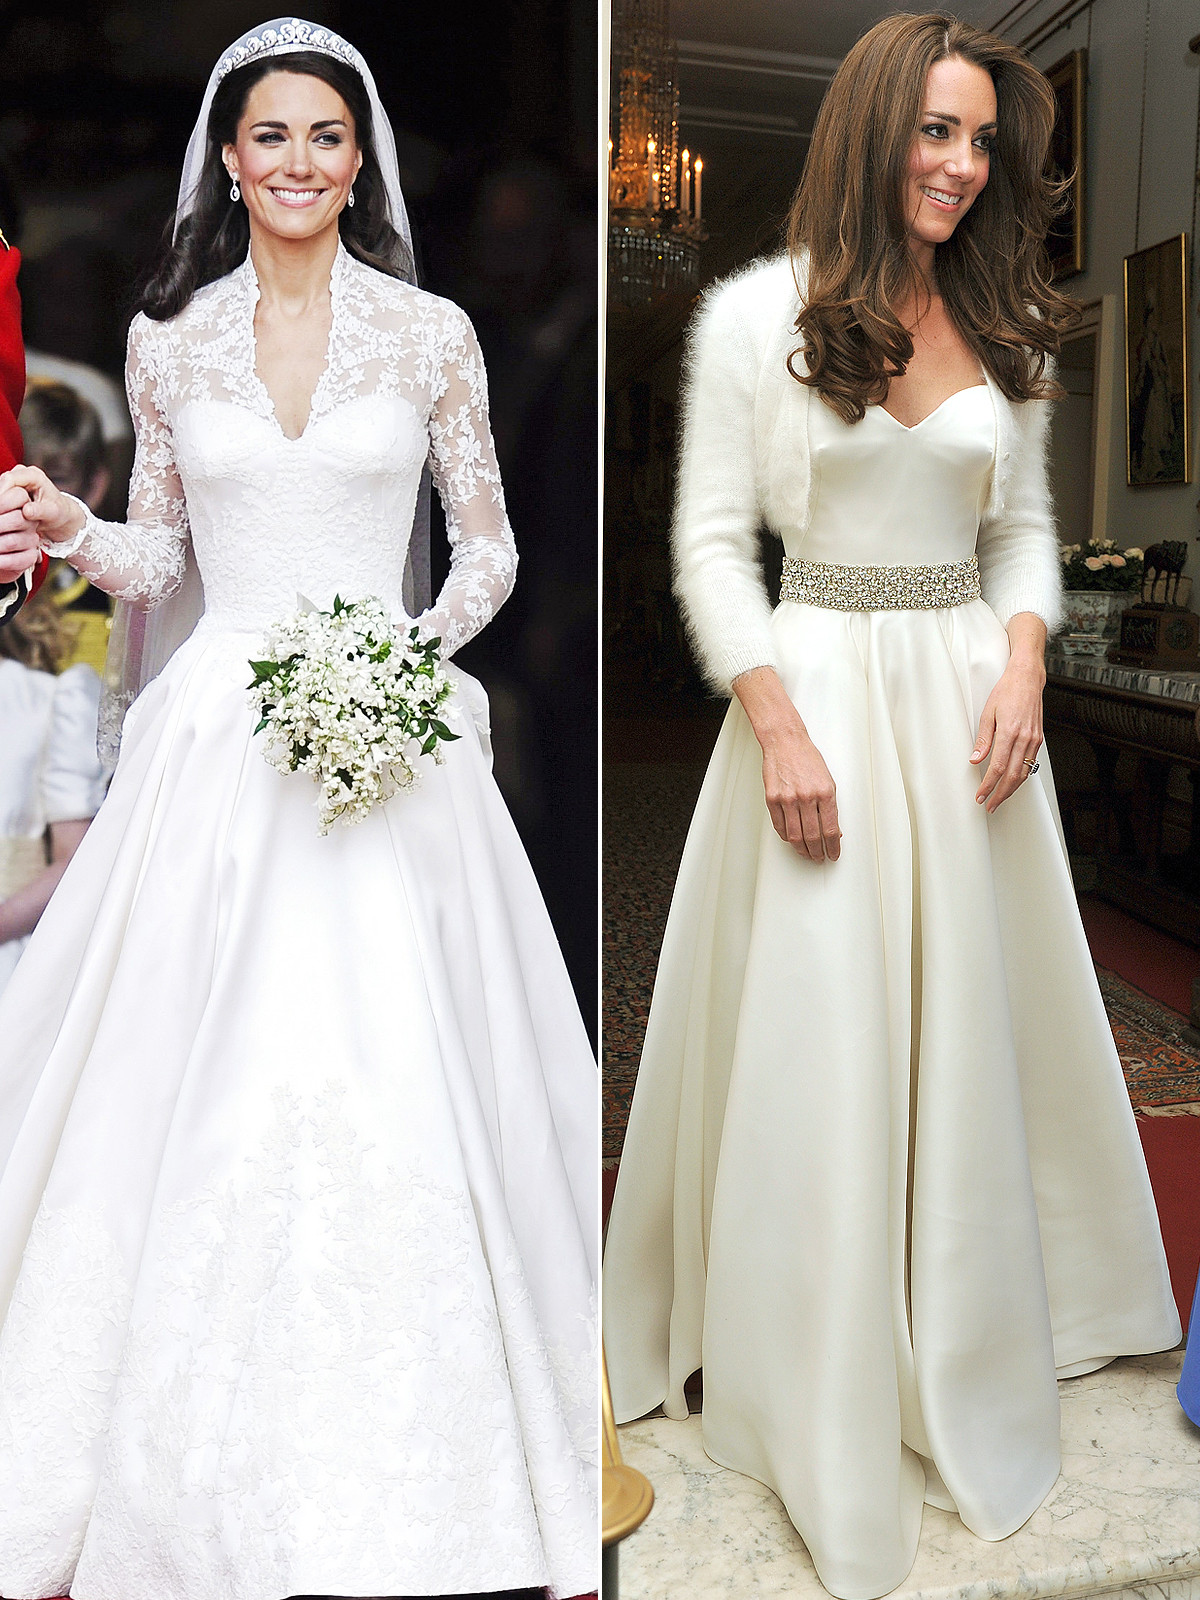 Kate Middleton Wedding Gown
 Pippa Middleton Wearing Two Wedding Dresses Like Kate